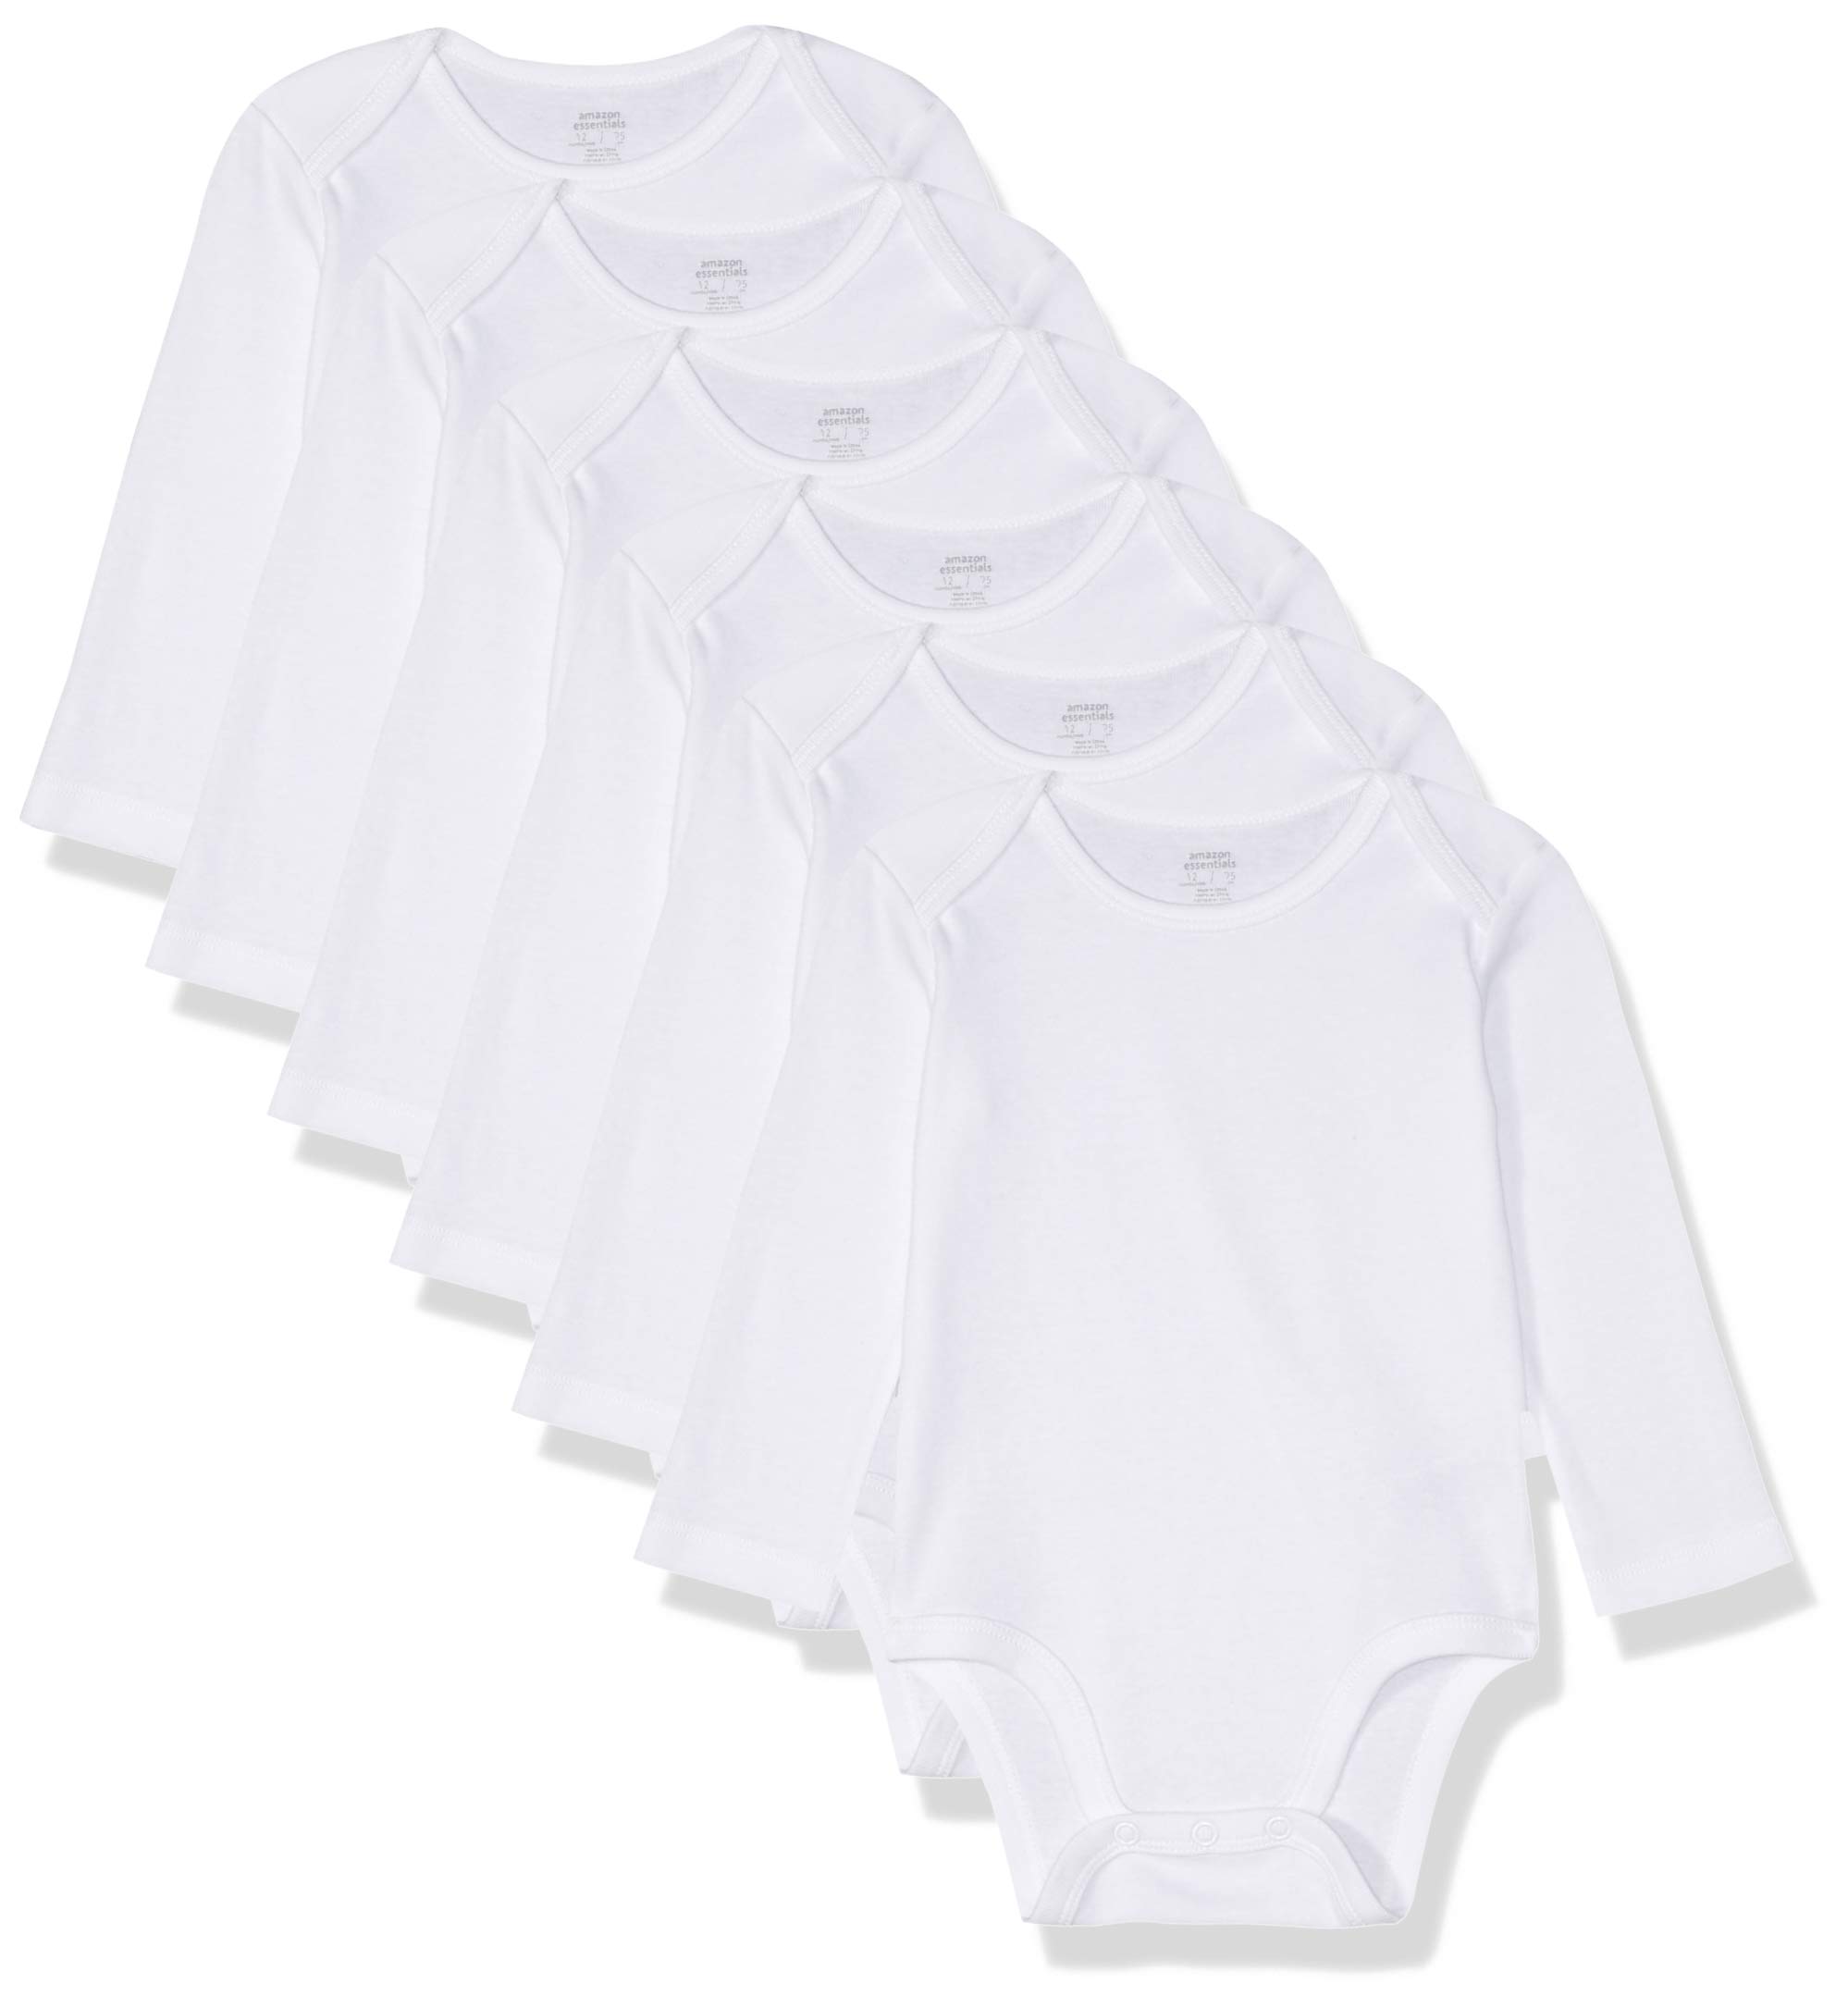 Amazon Essentials Unisex Babies' Long-Sleeve Bodysuits, Pack of 6